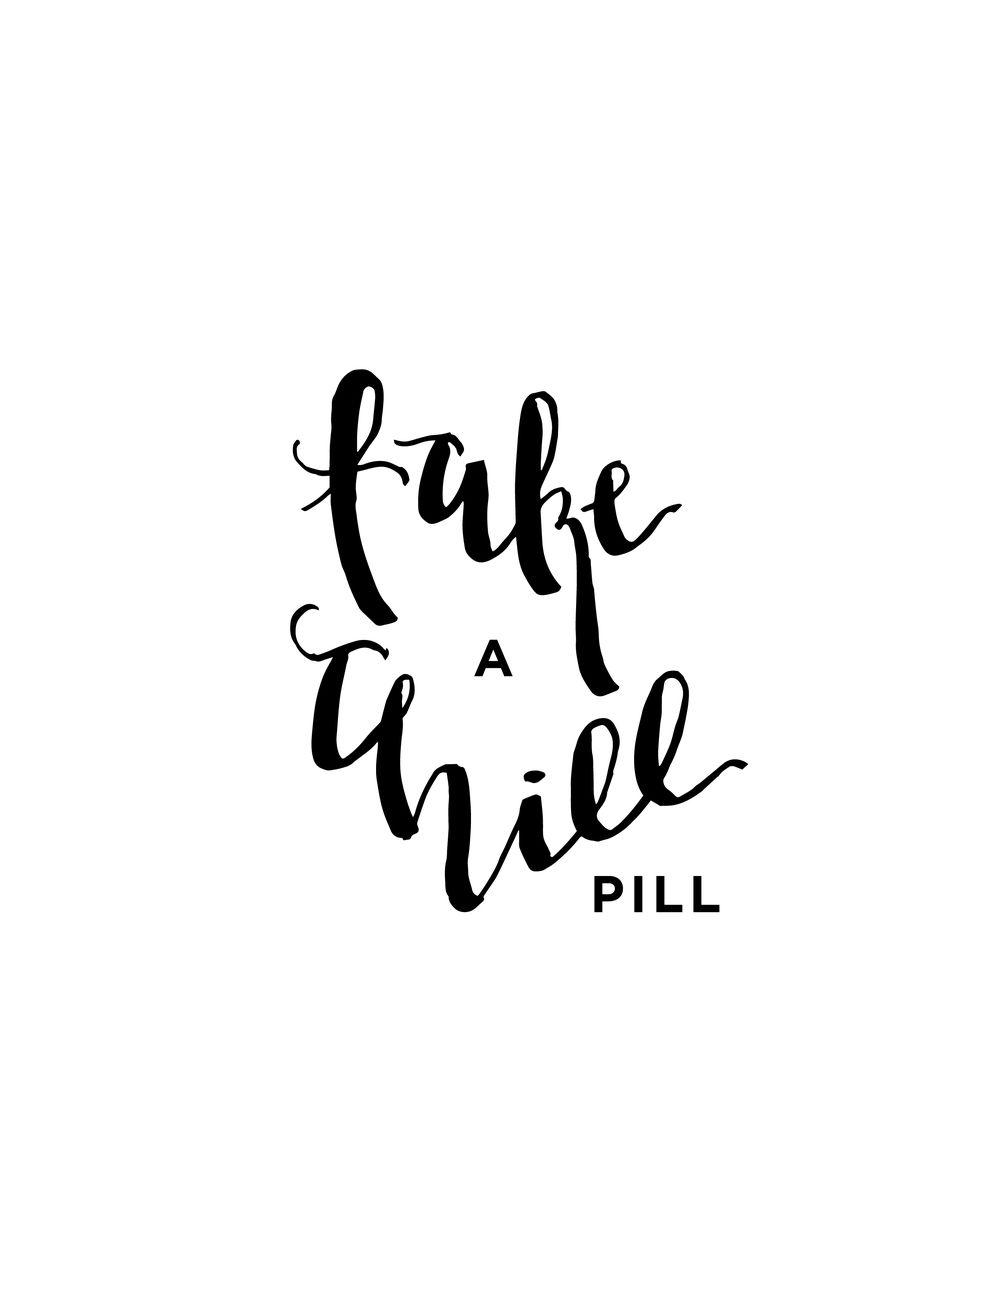 Chill Pill Logo - HandLetterHumpday—Chill Pill FREE PRINTABLE • Hoot Design Co. | Web ...